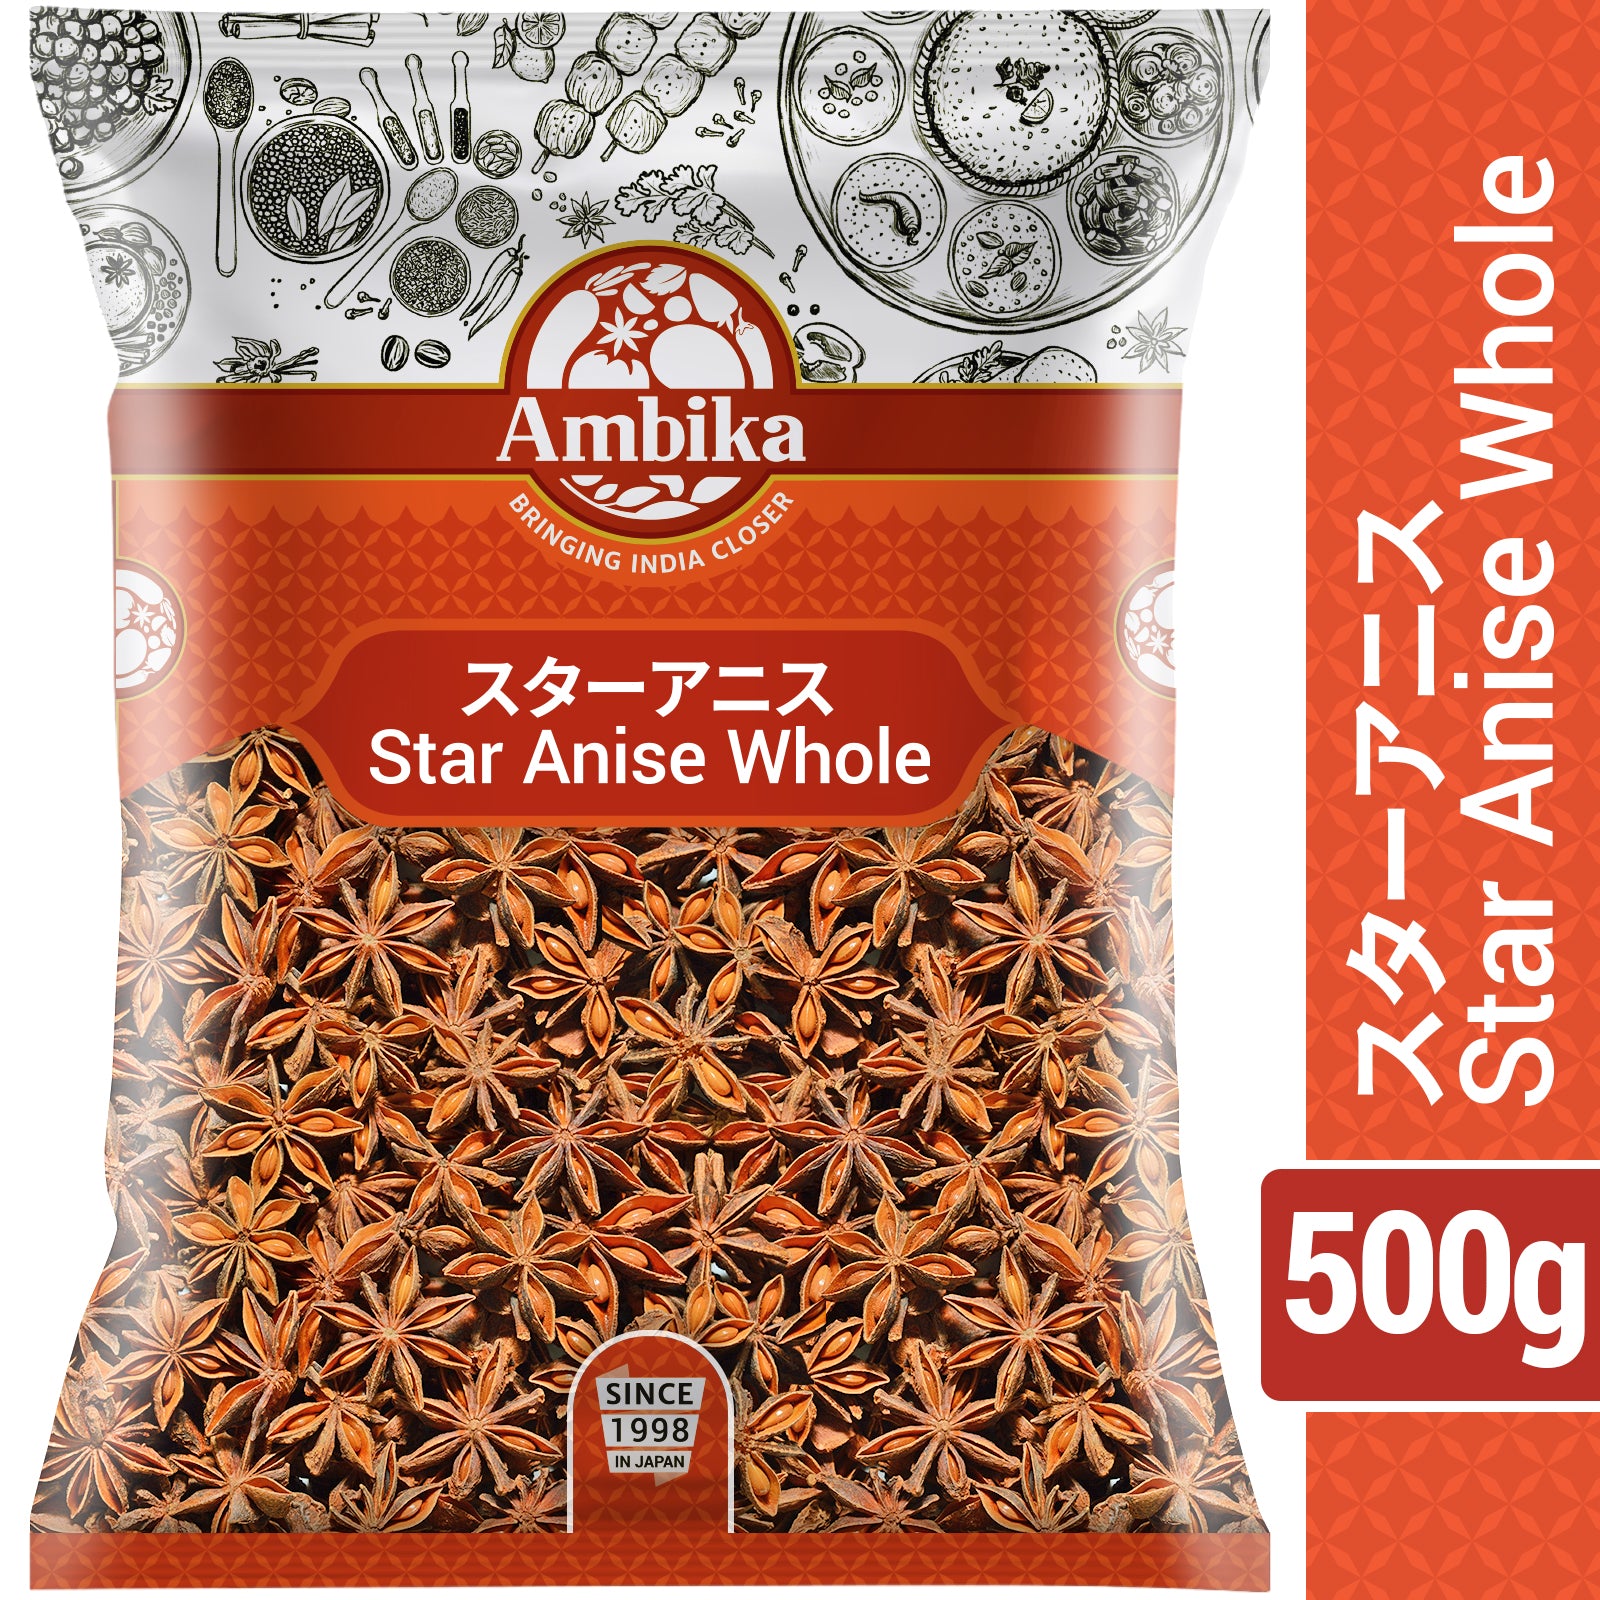 Ambika Star Anise Whole 500g